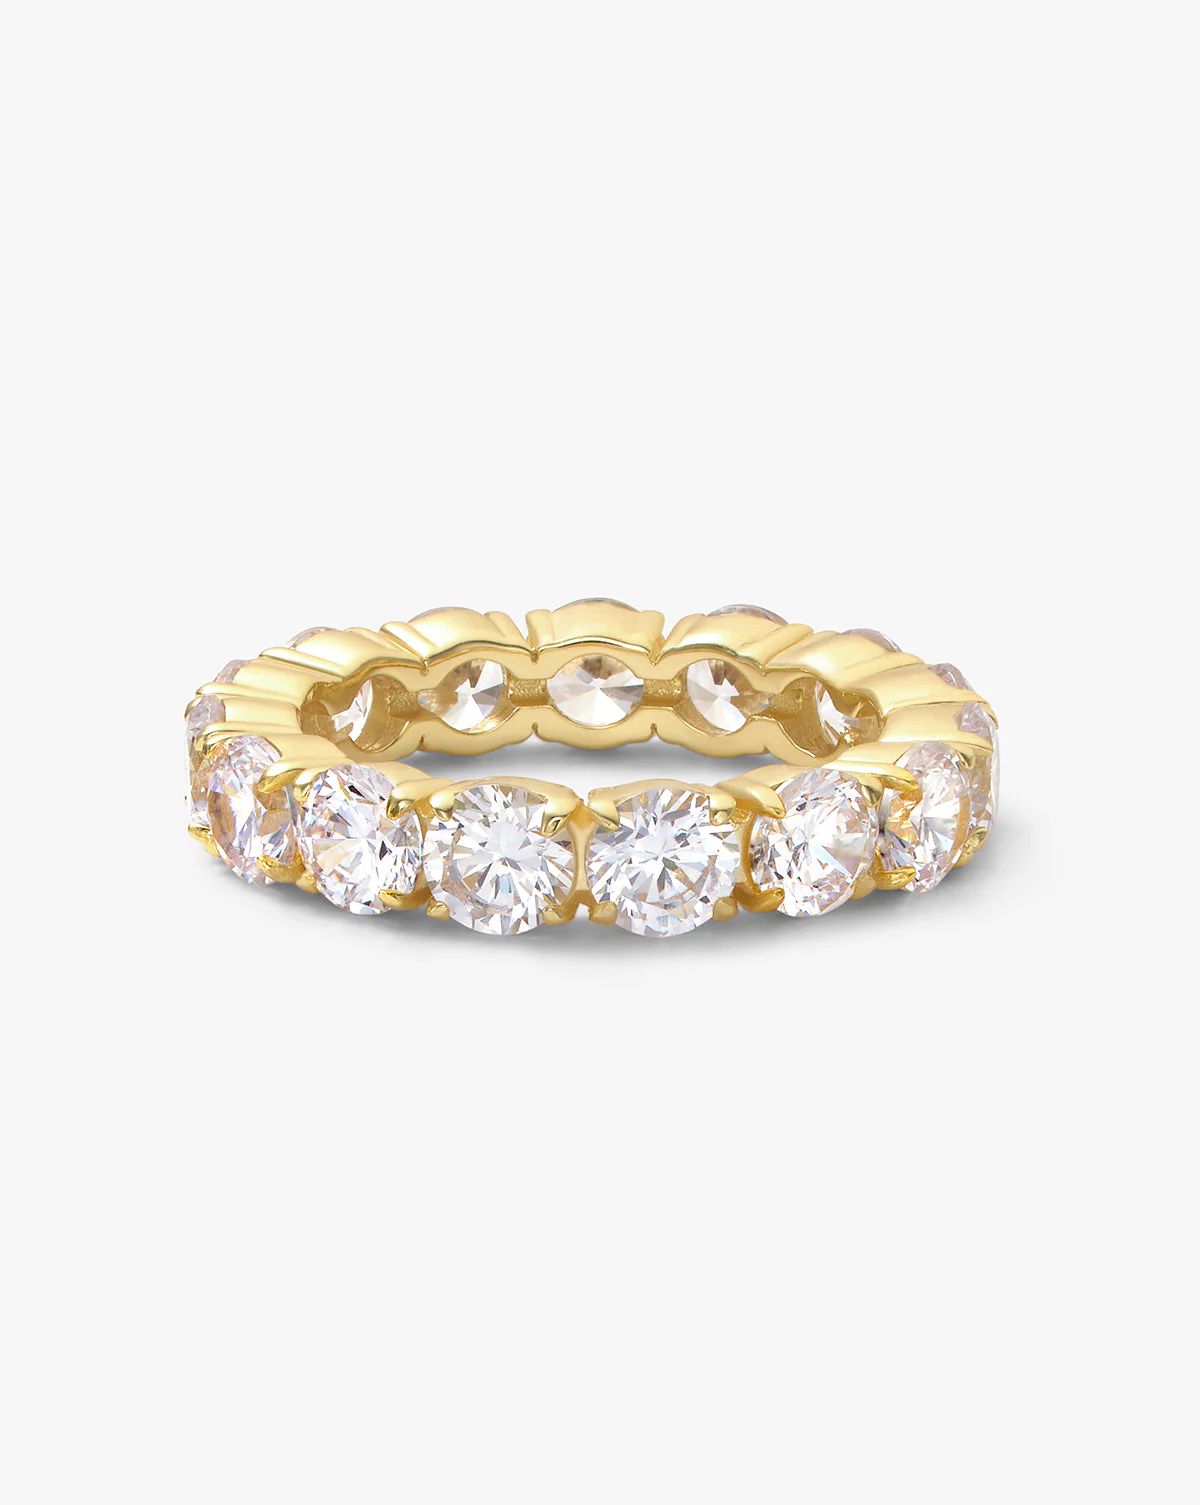 Grand Heiress Ring - Gold|White Diamondettes | Melinda Maria